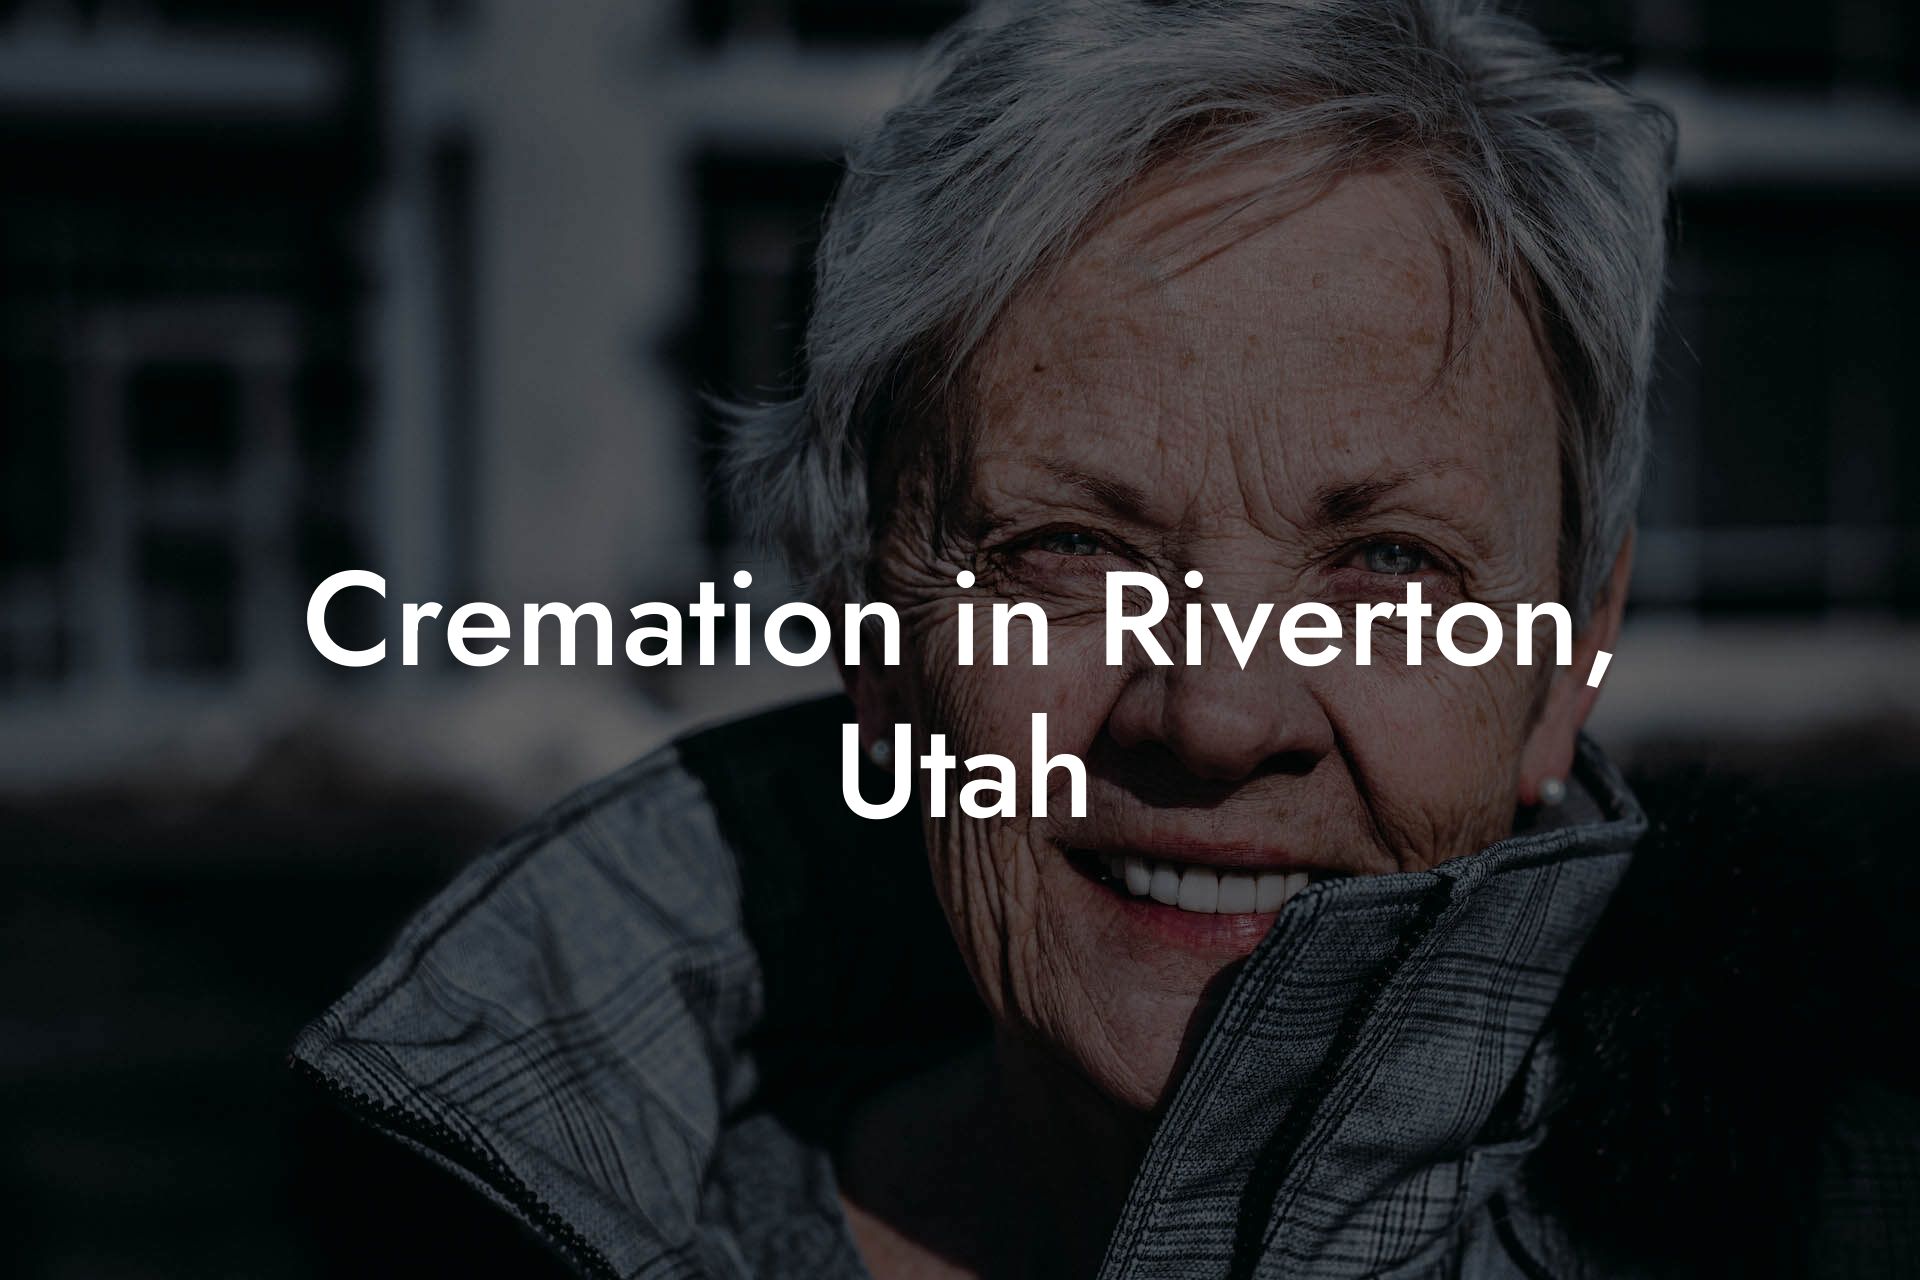 Cremation in Riverton, Utah